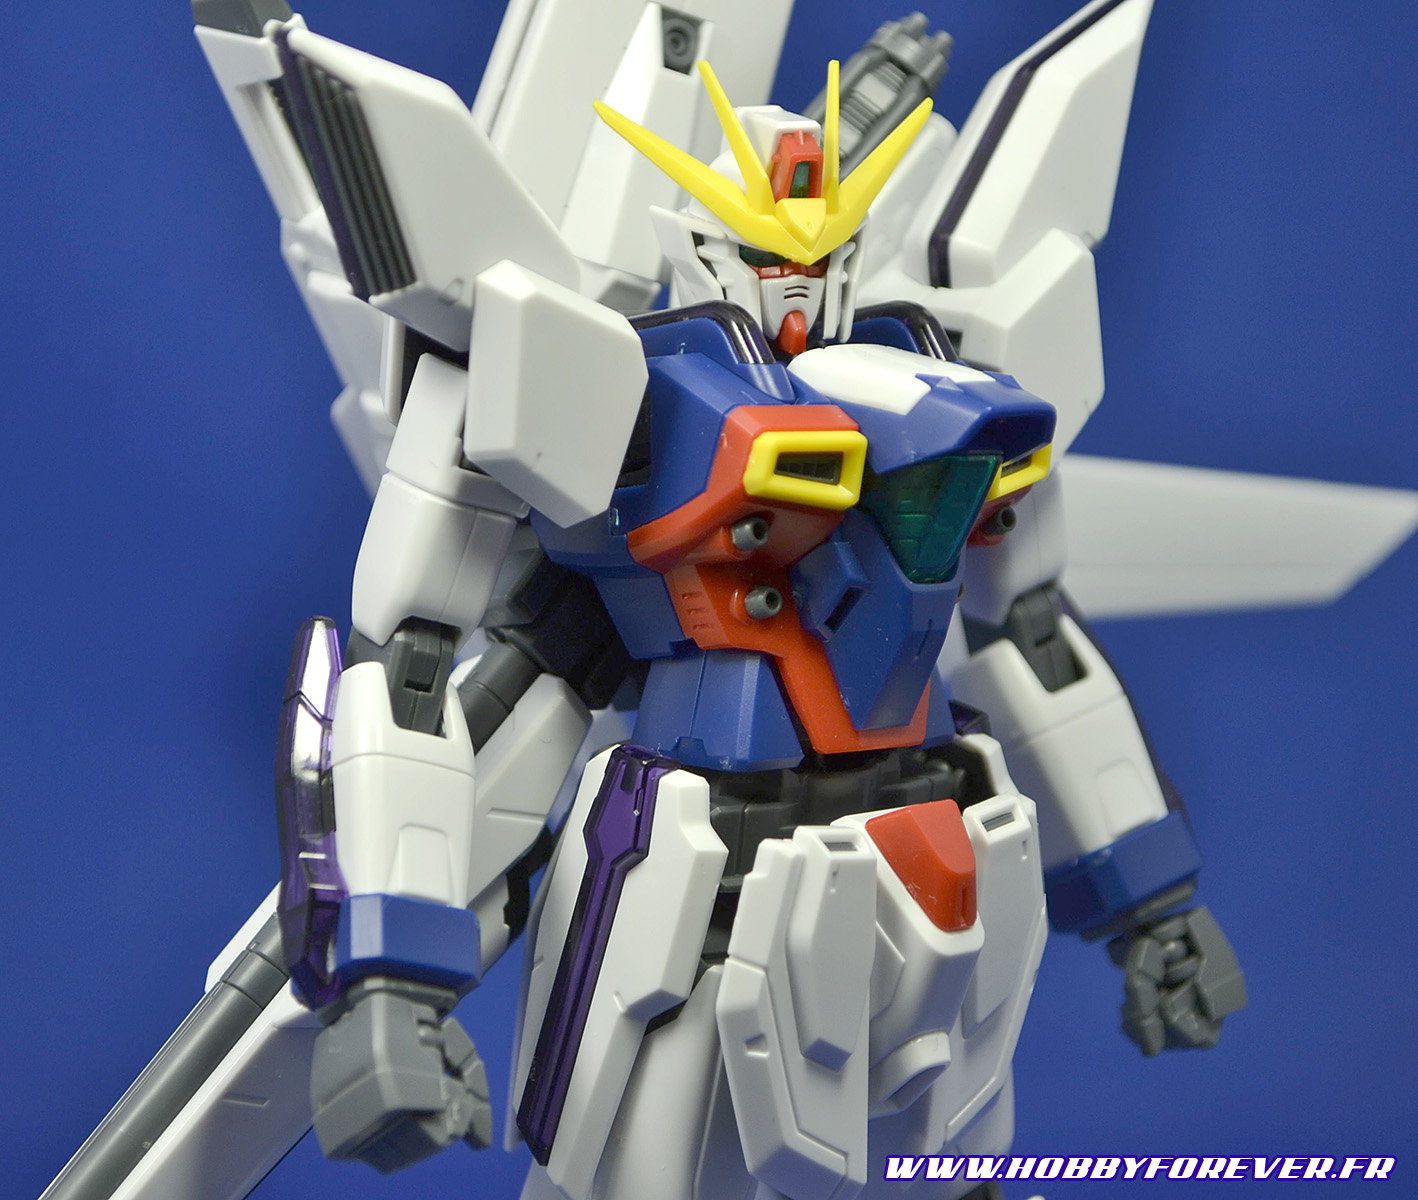 MG GX-9900 Gundam X - Review